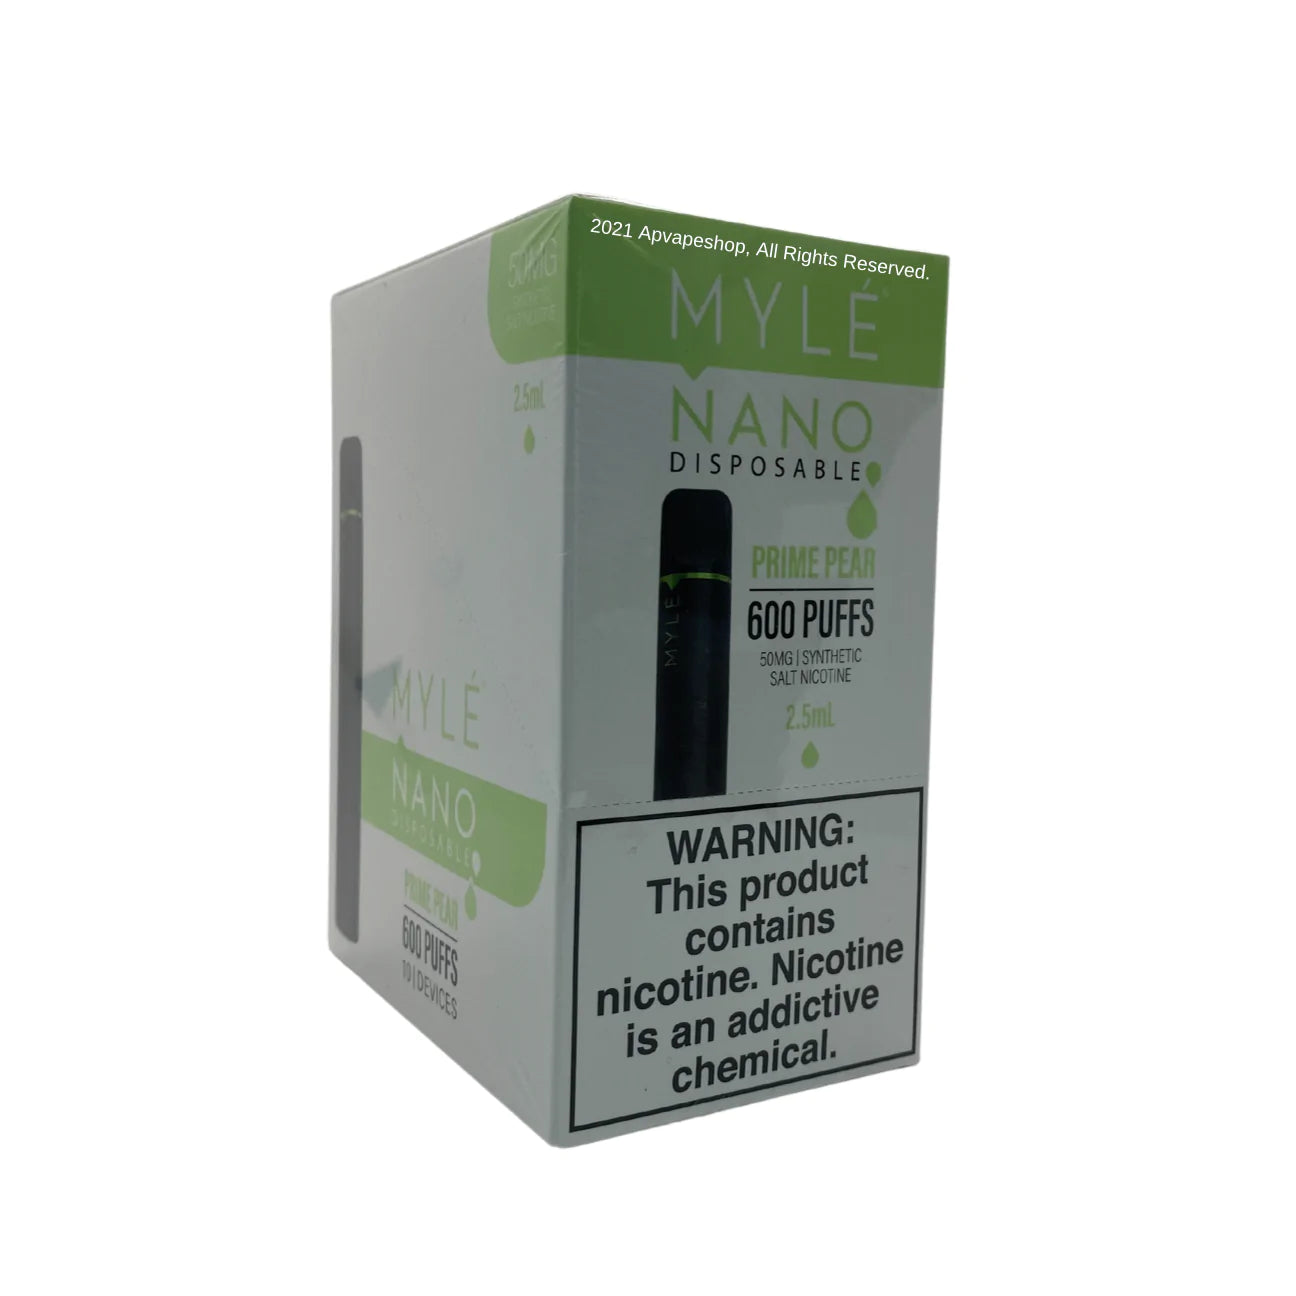 Myle Nano Disposable Vape Wholesale 10 Pack Prime Pear